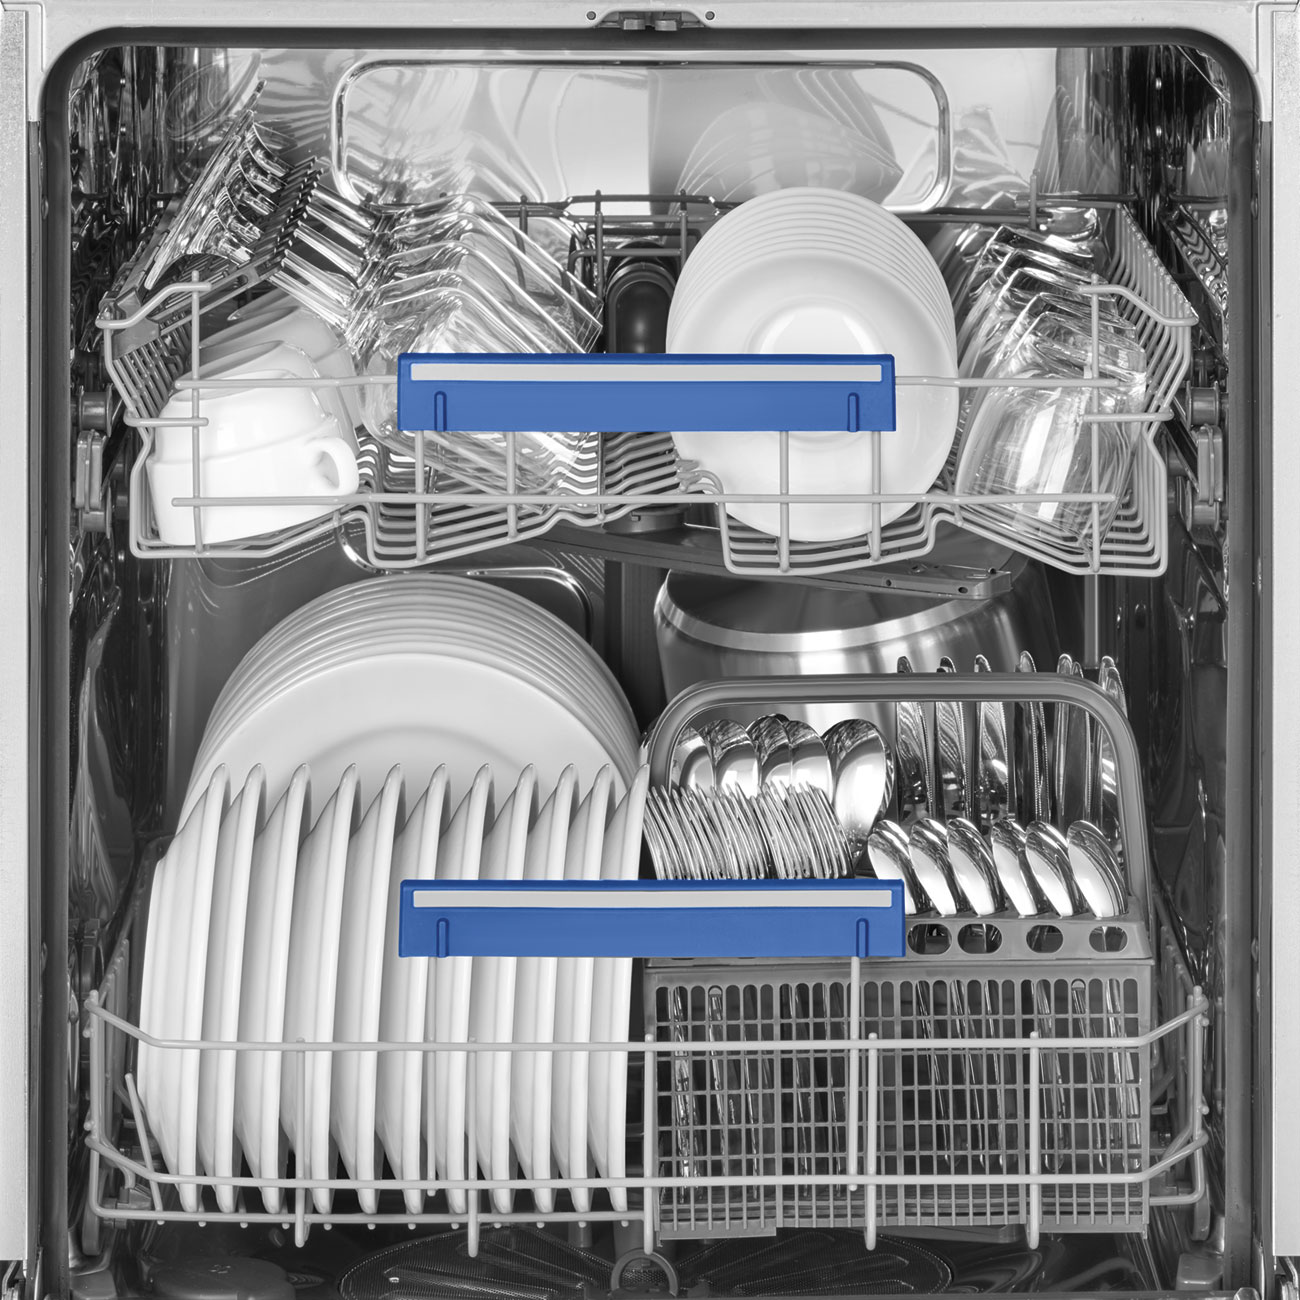  dishwasher 60 cm Smeg_9